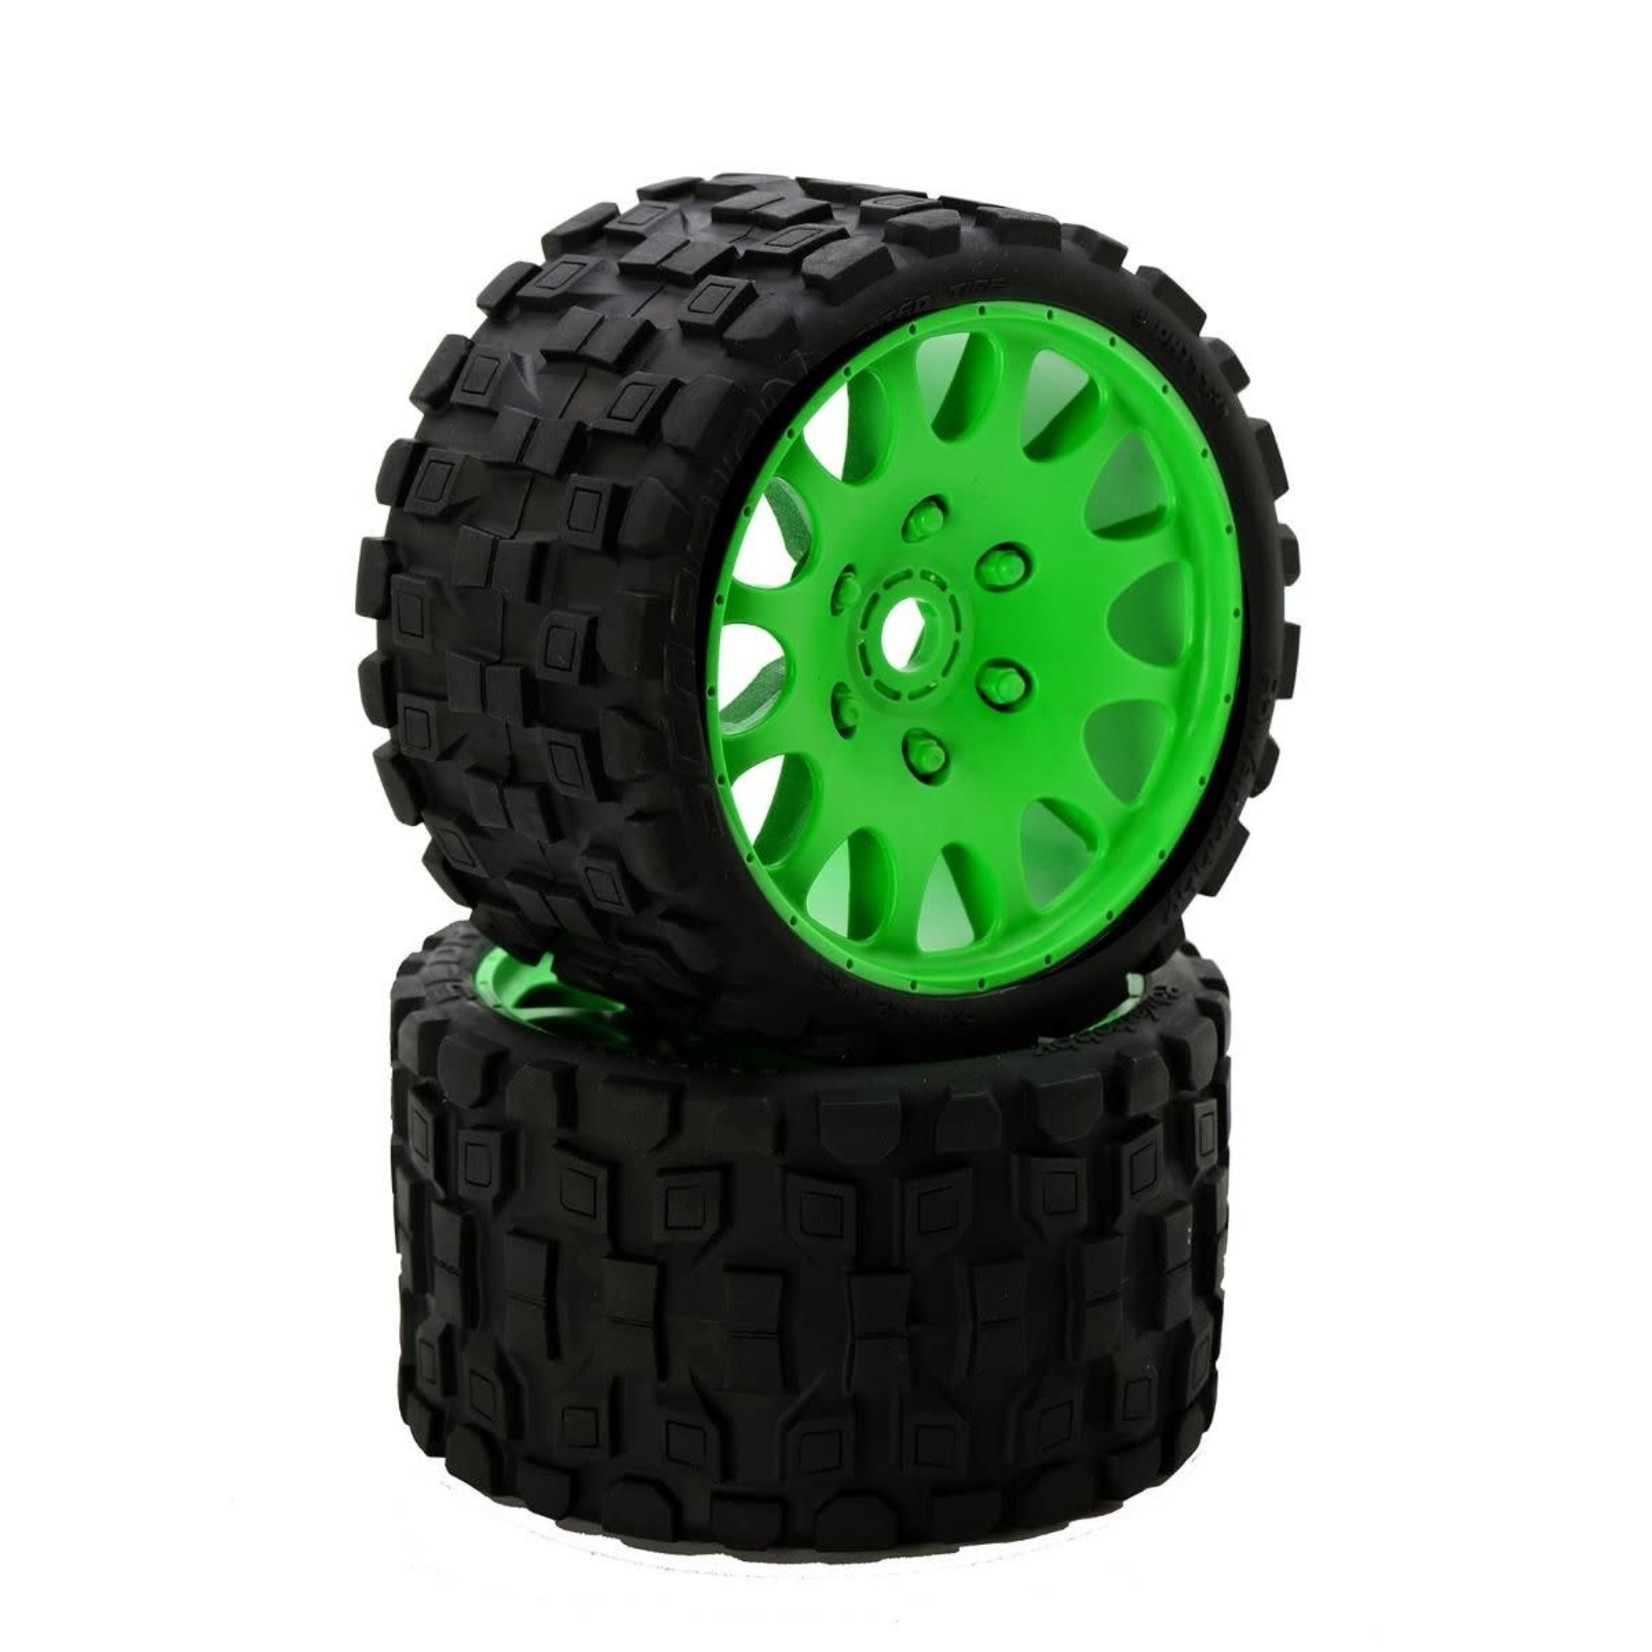 Power Hobby Power Hobby Scorpion Belted Monster Truck Tires/Wheels w/ 17mm Hex (2) Sport-Green #PHBPHT1131SGREEN